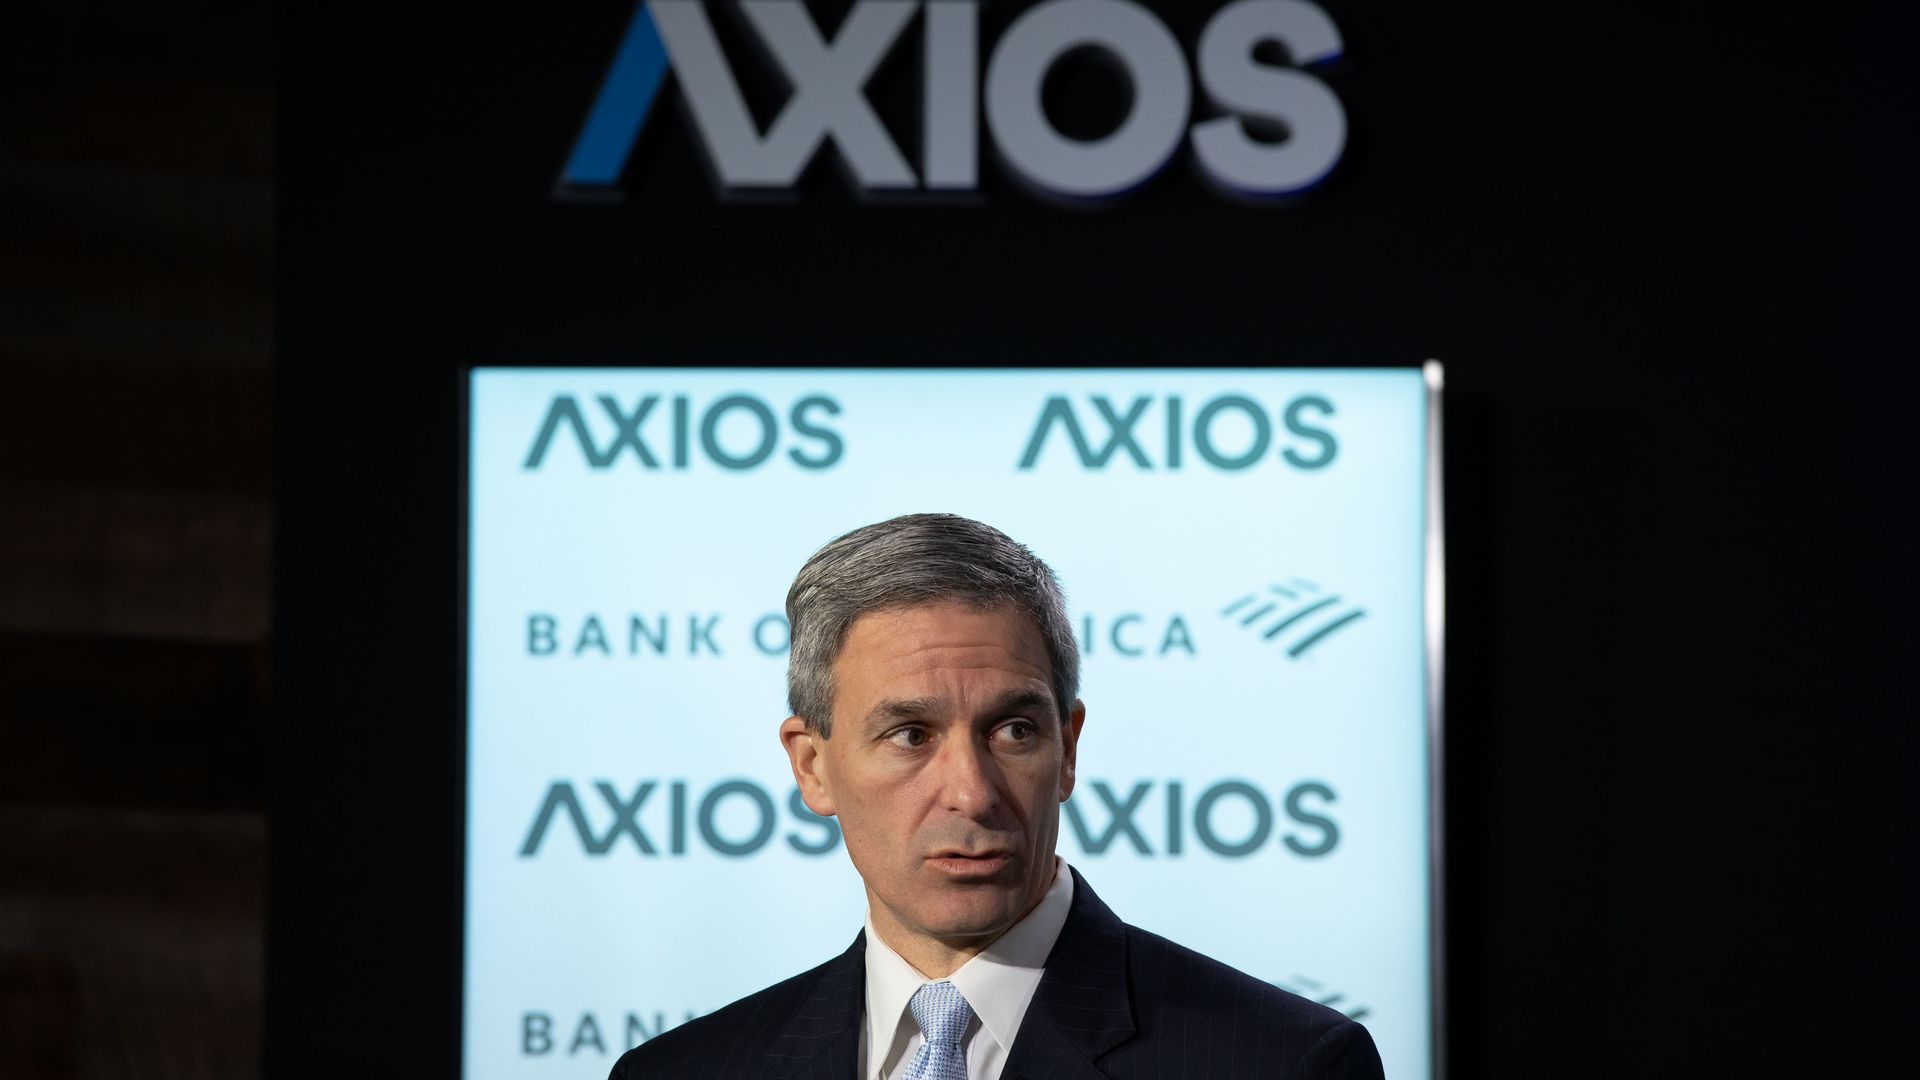 Ken Cuccinelli at an Axios event